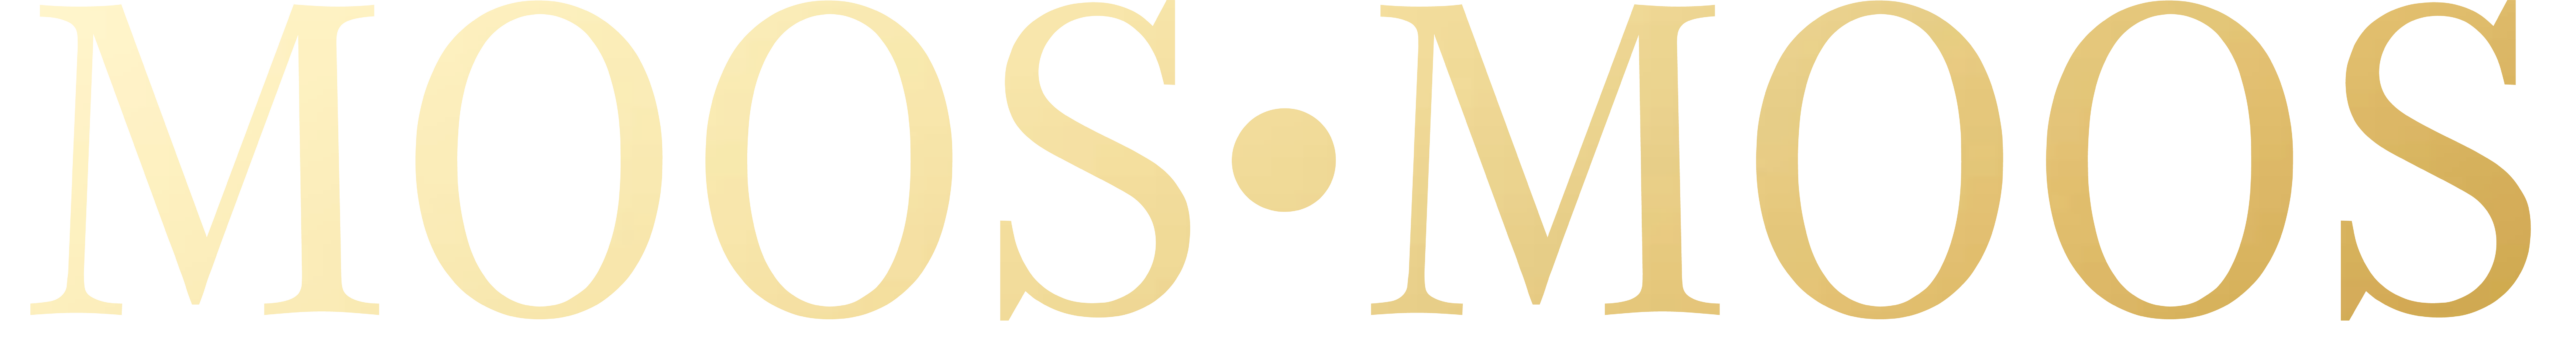 MoosMoos_Logo_Gold